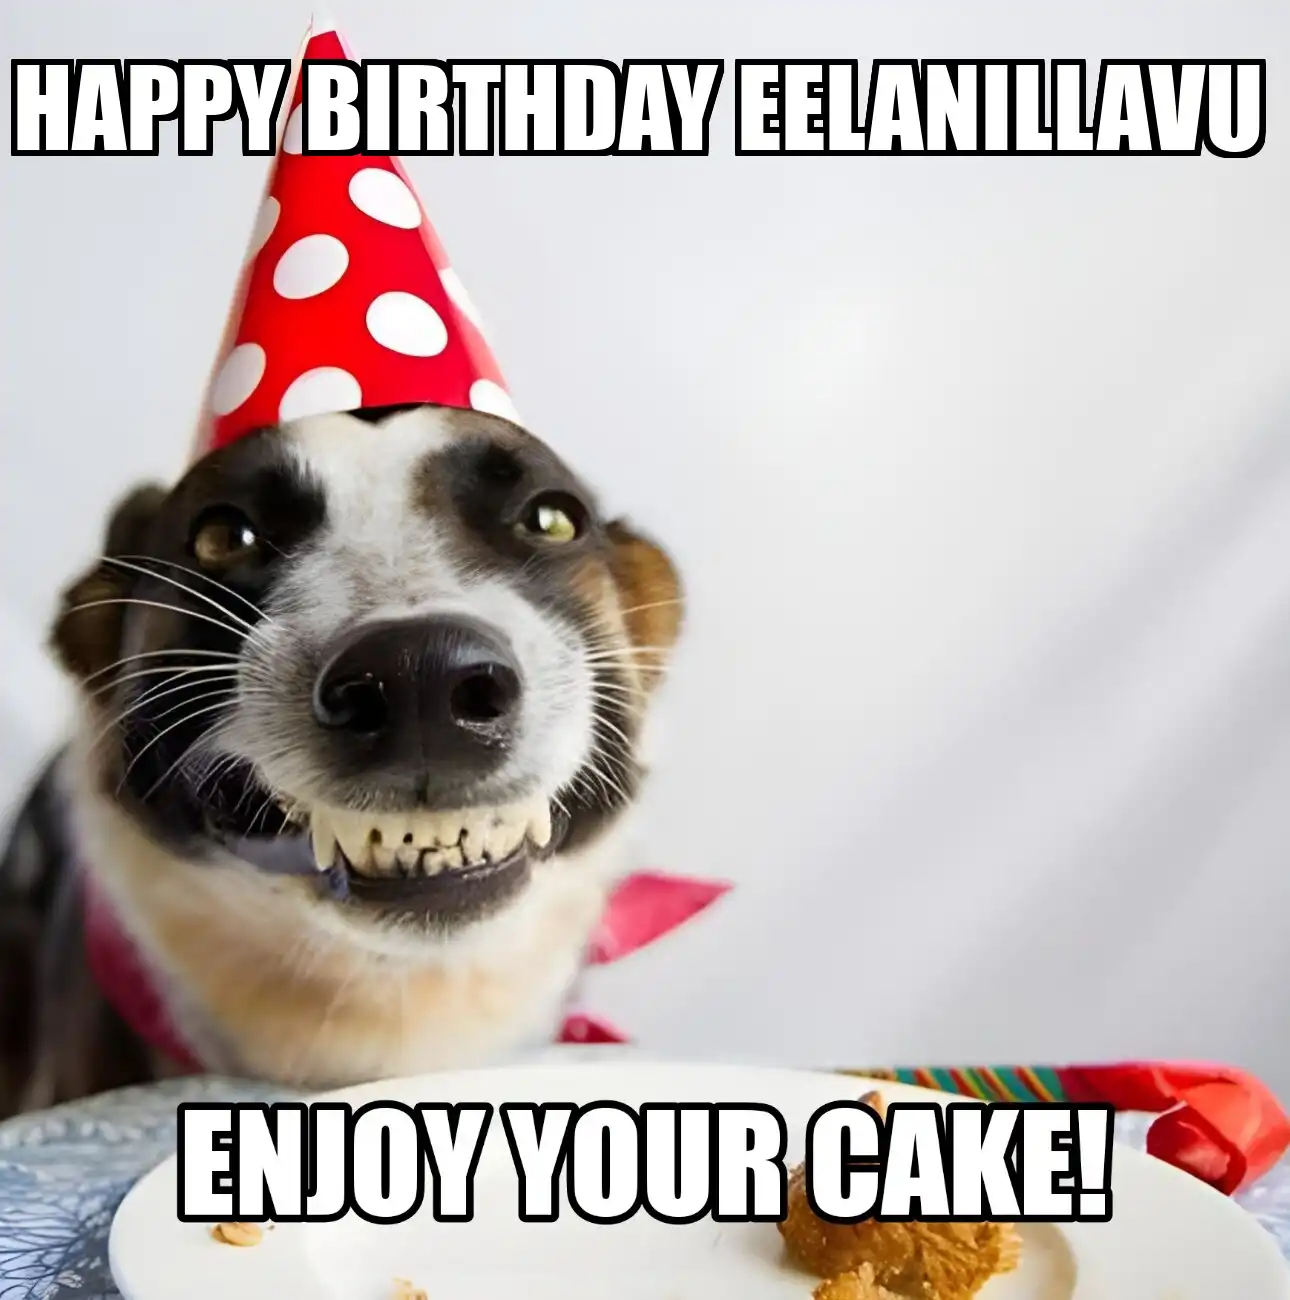 Happy Birthday Eelanillavu Enjoy Your Cake Dog Meme